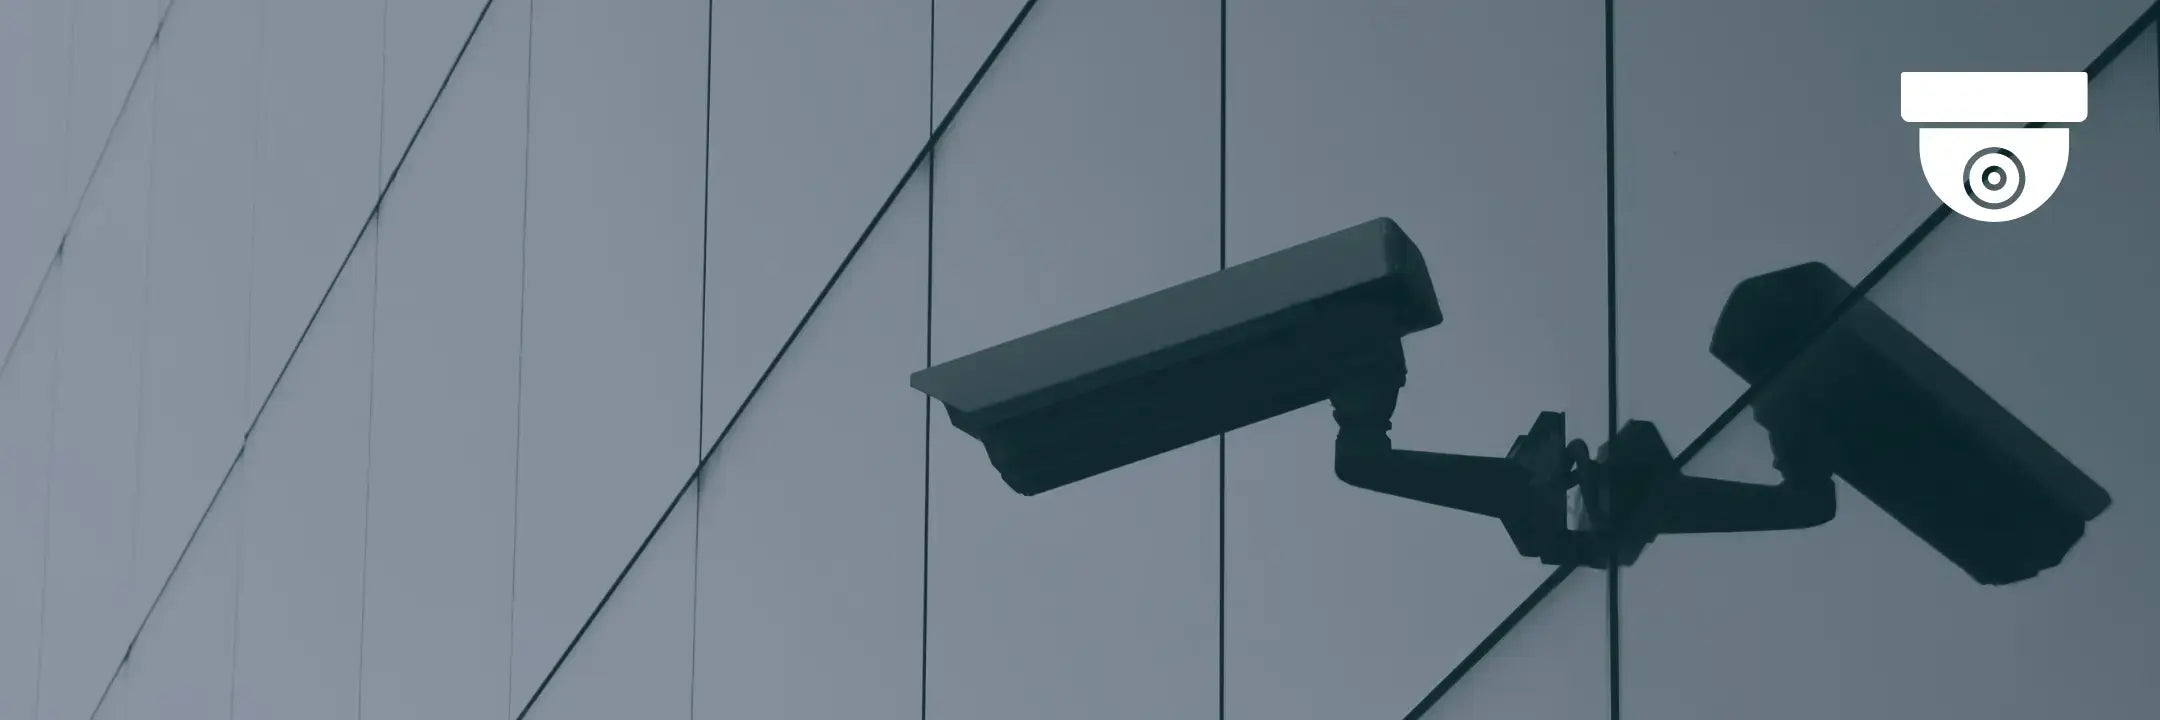 video surveillance industry RVI desktop banner